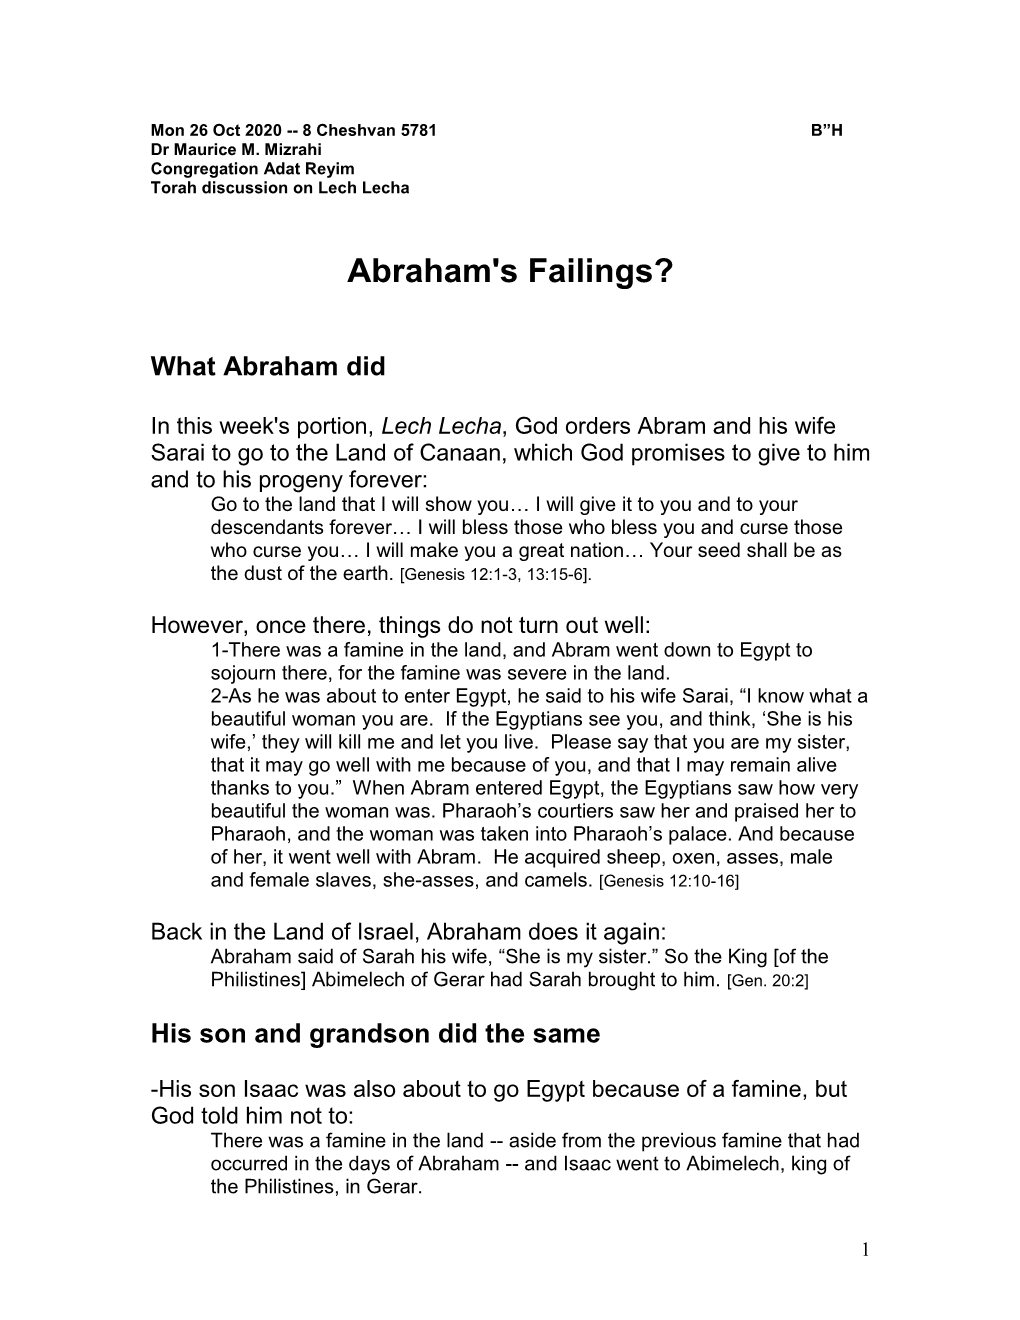 Abraham's Failings?